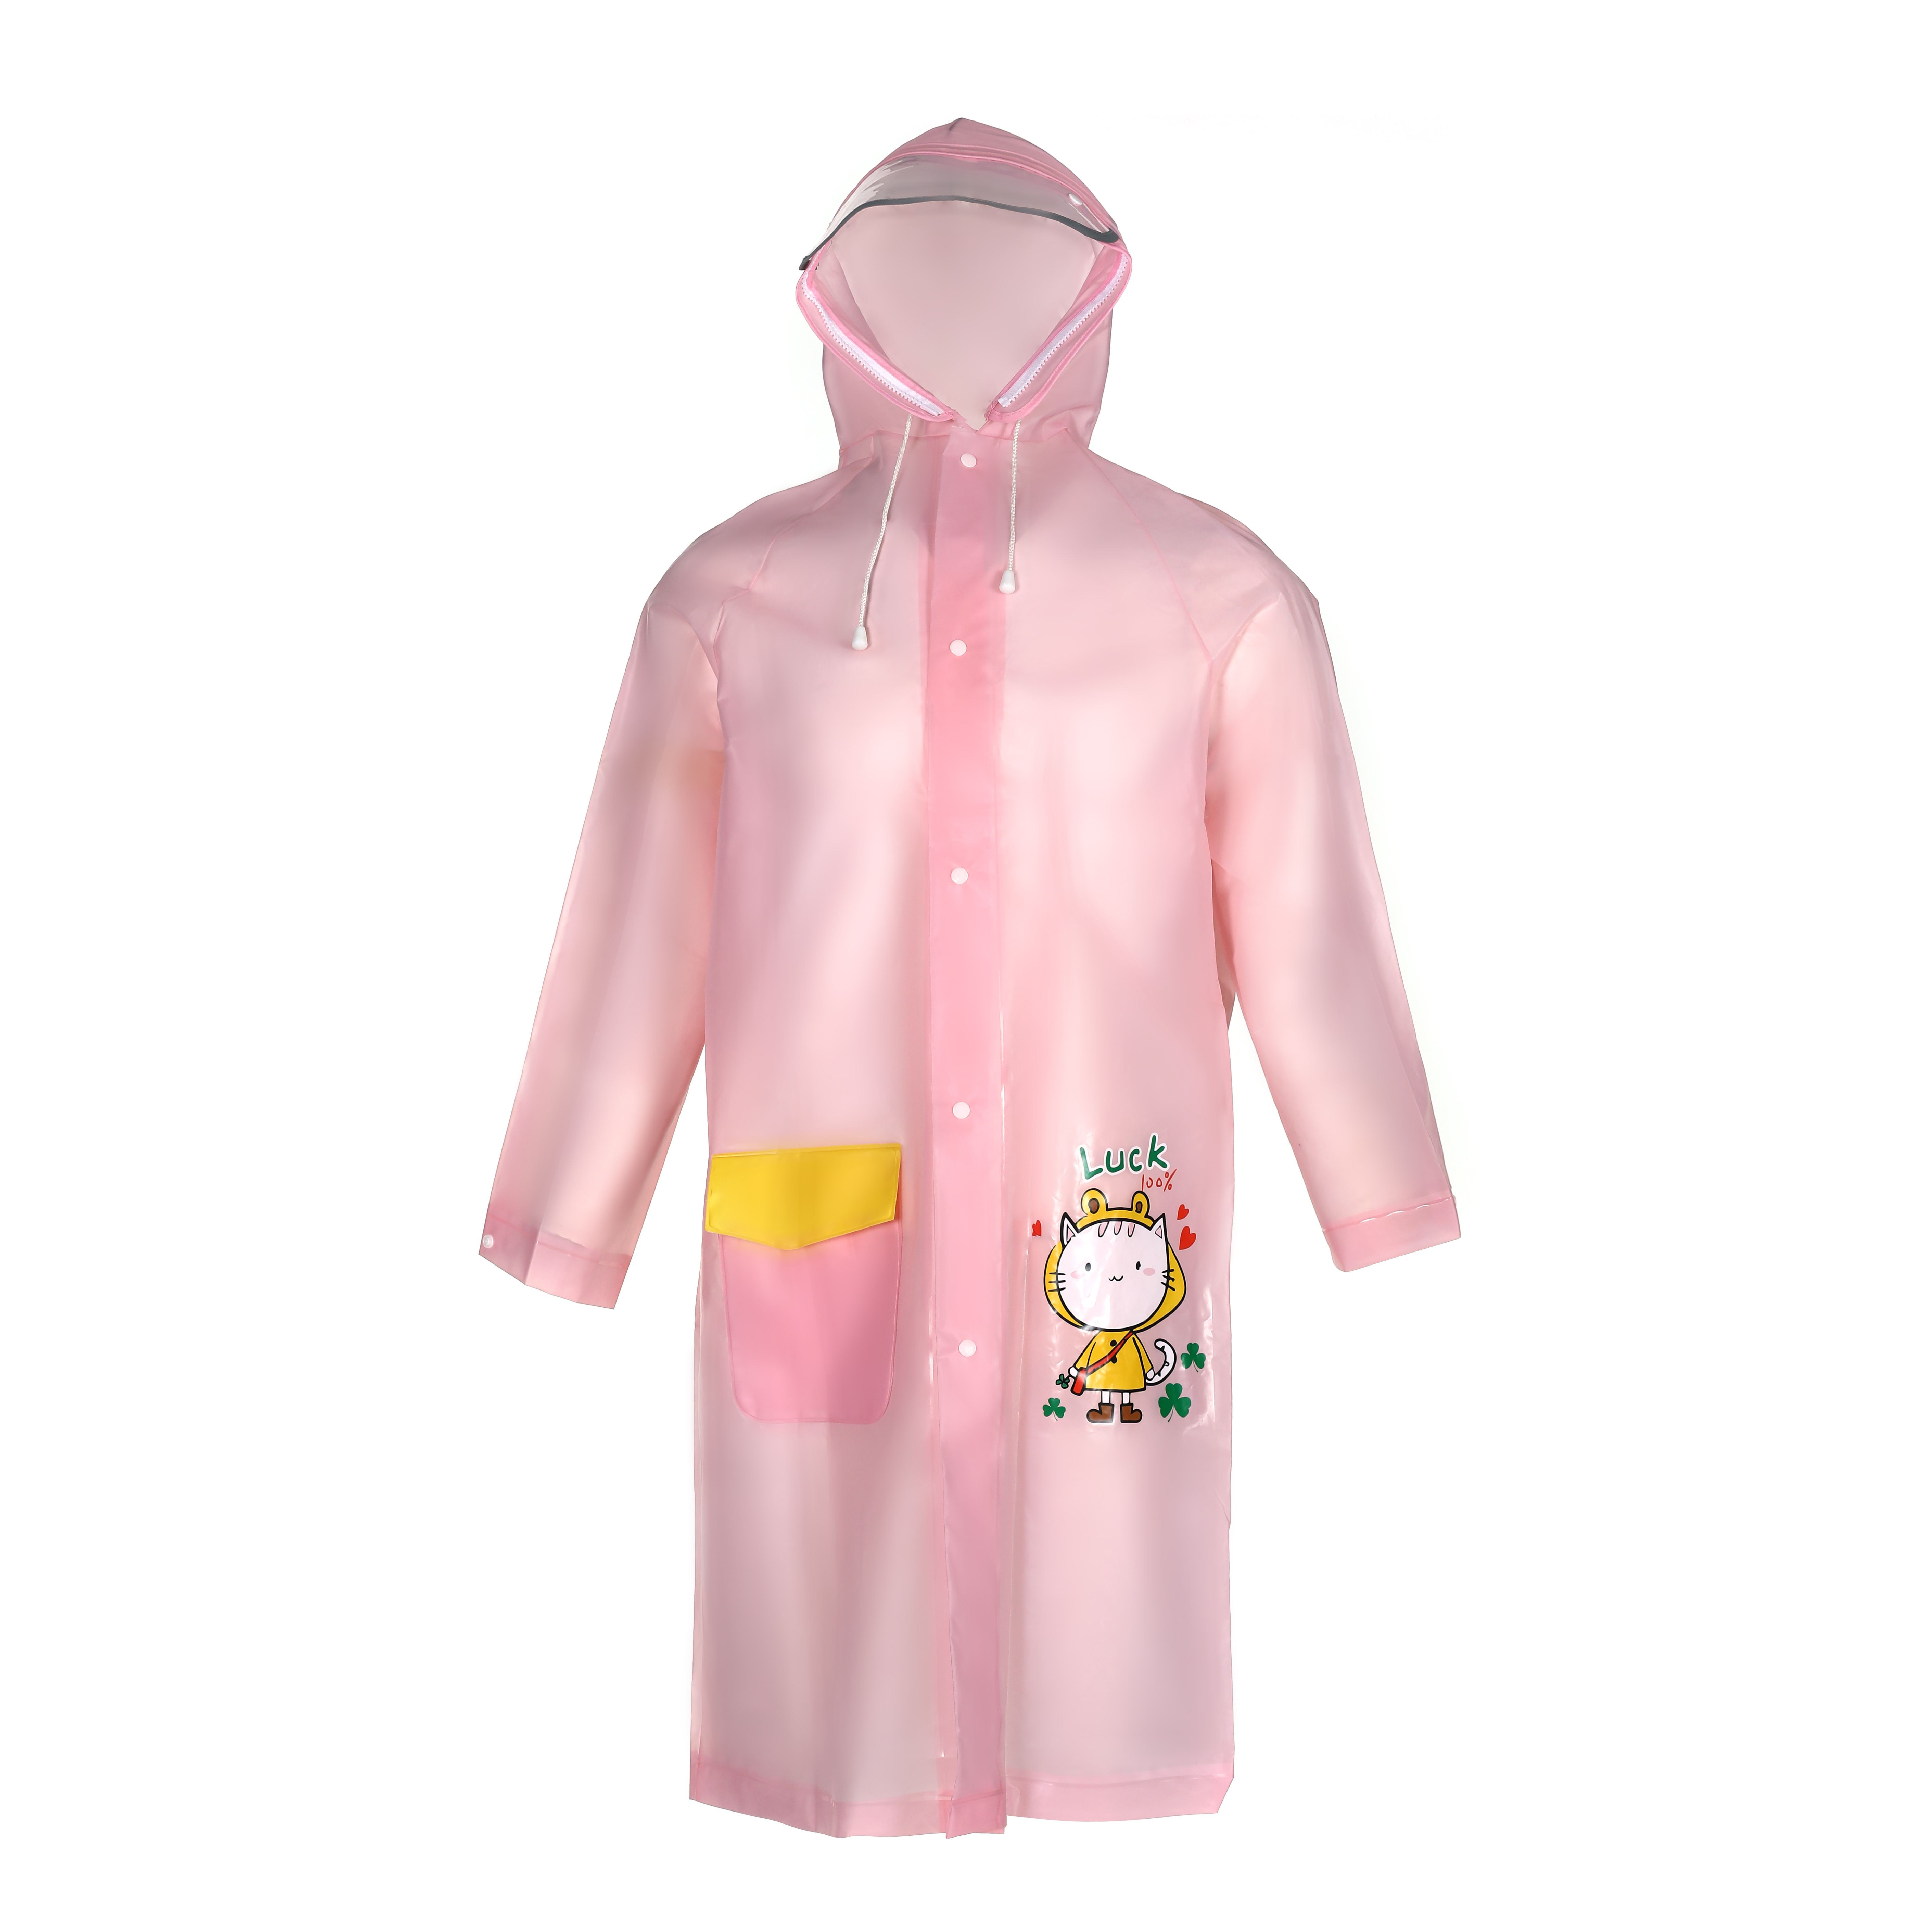 100% Waterproof hot sale Outdoor high quality PEVA rain poncho raincoat with customize logo printing